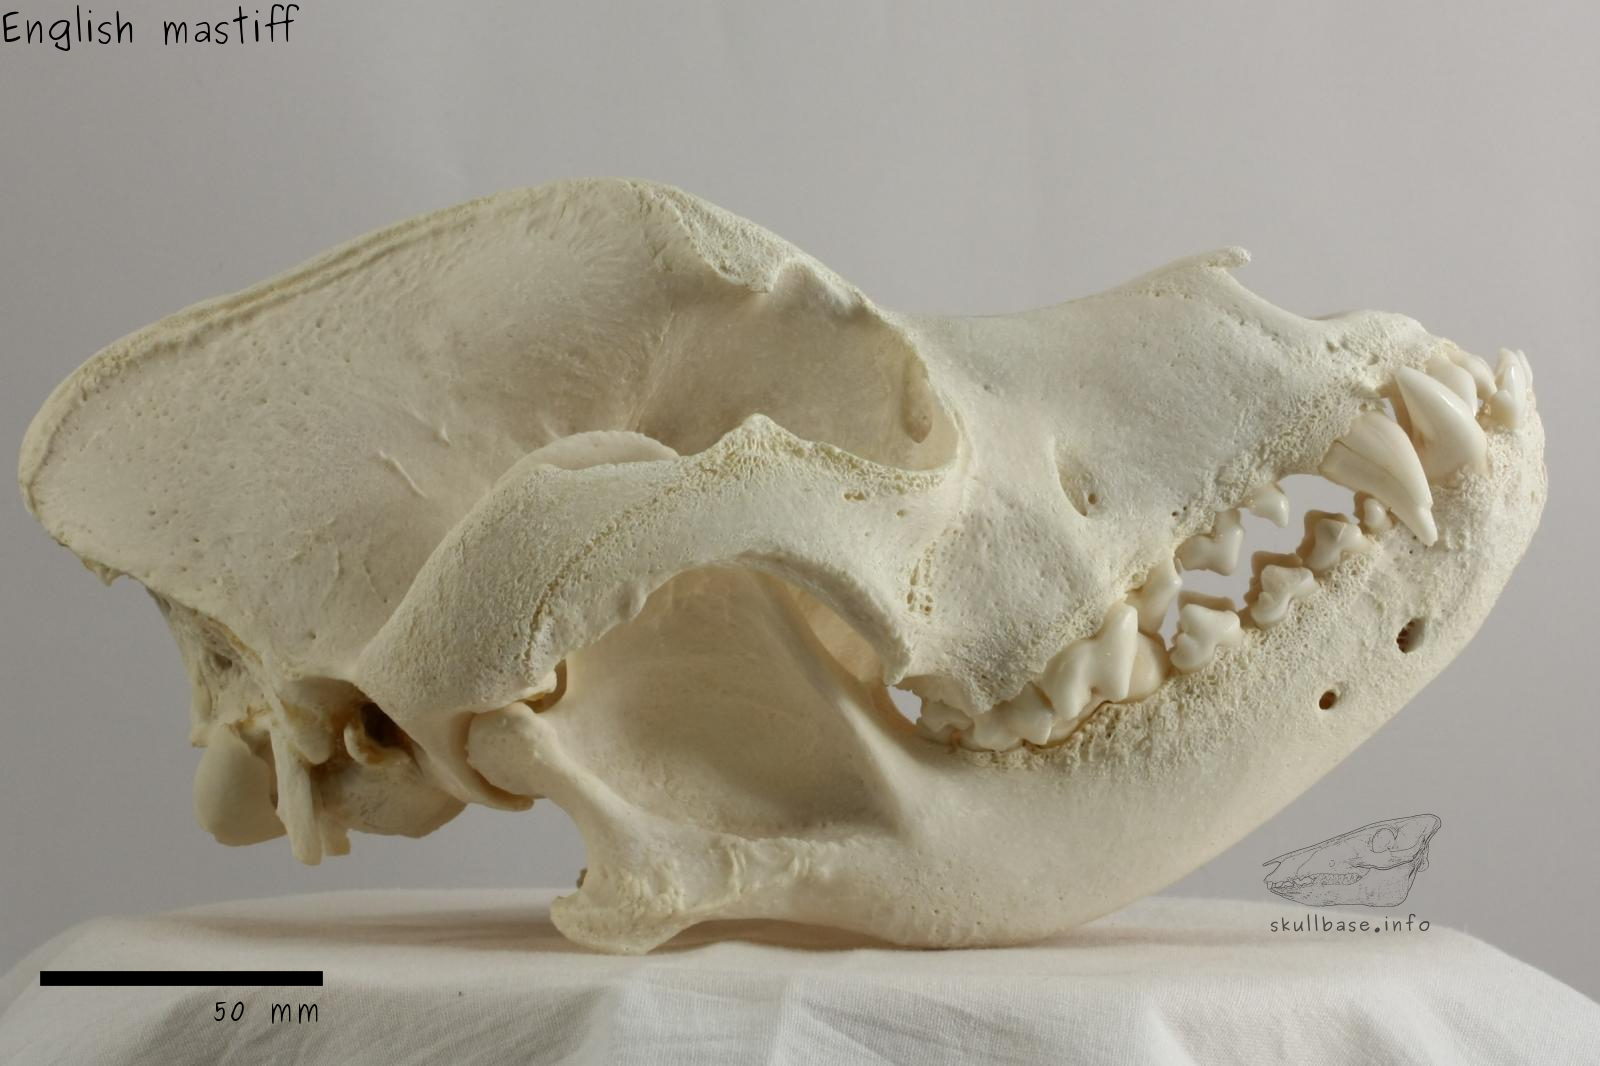 English mastiff (Canis lupus familiaris) skull lateral view